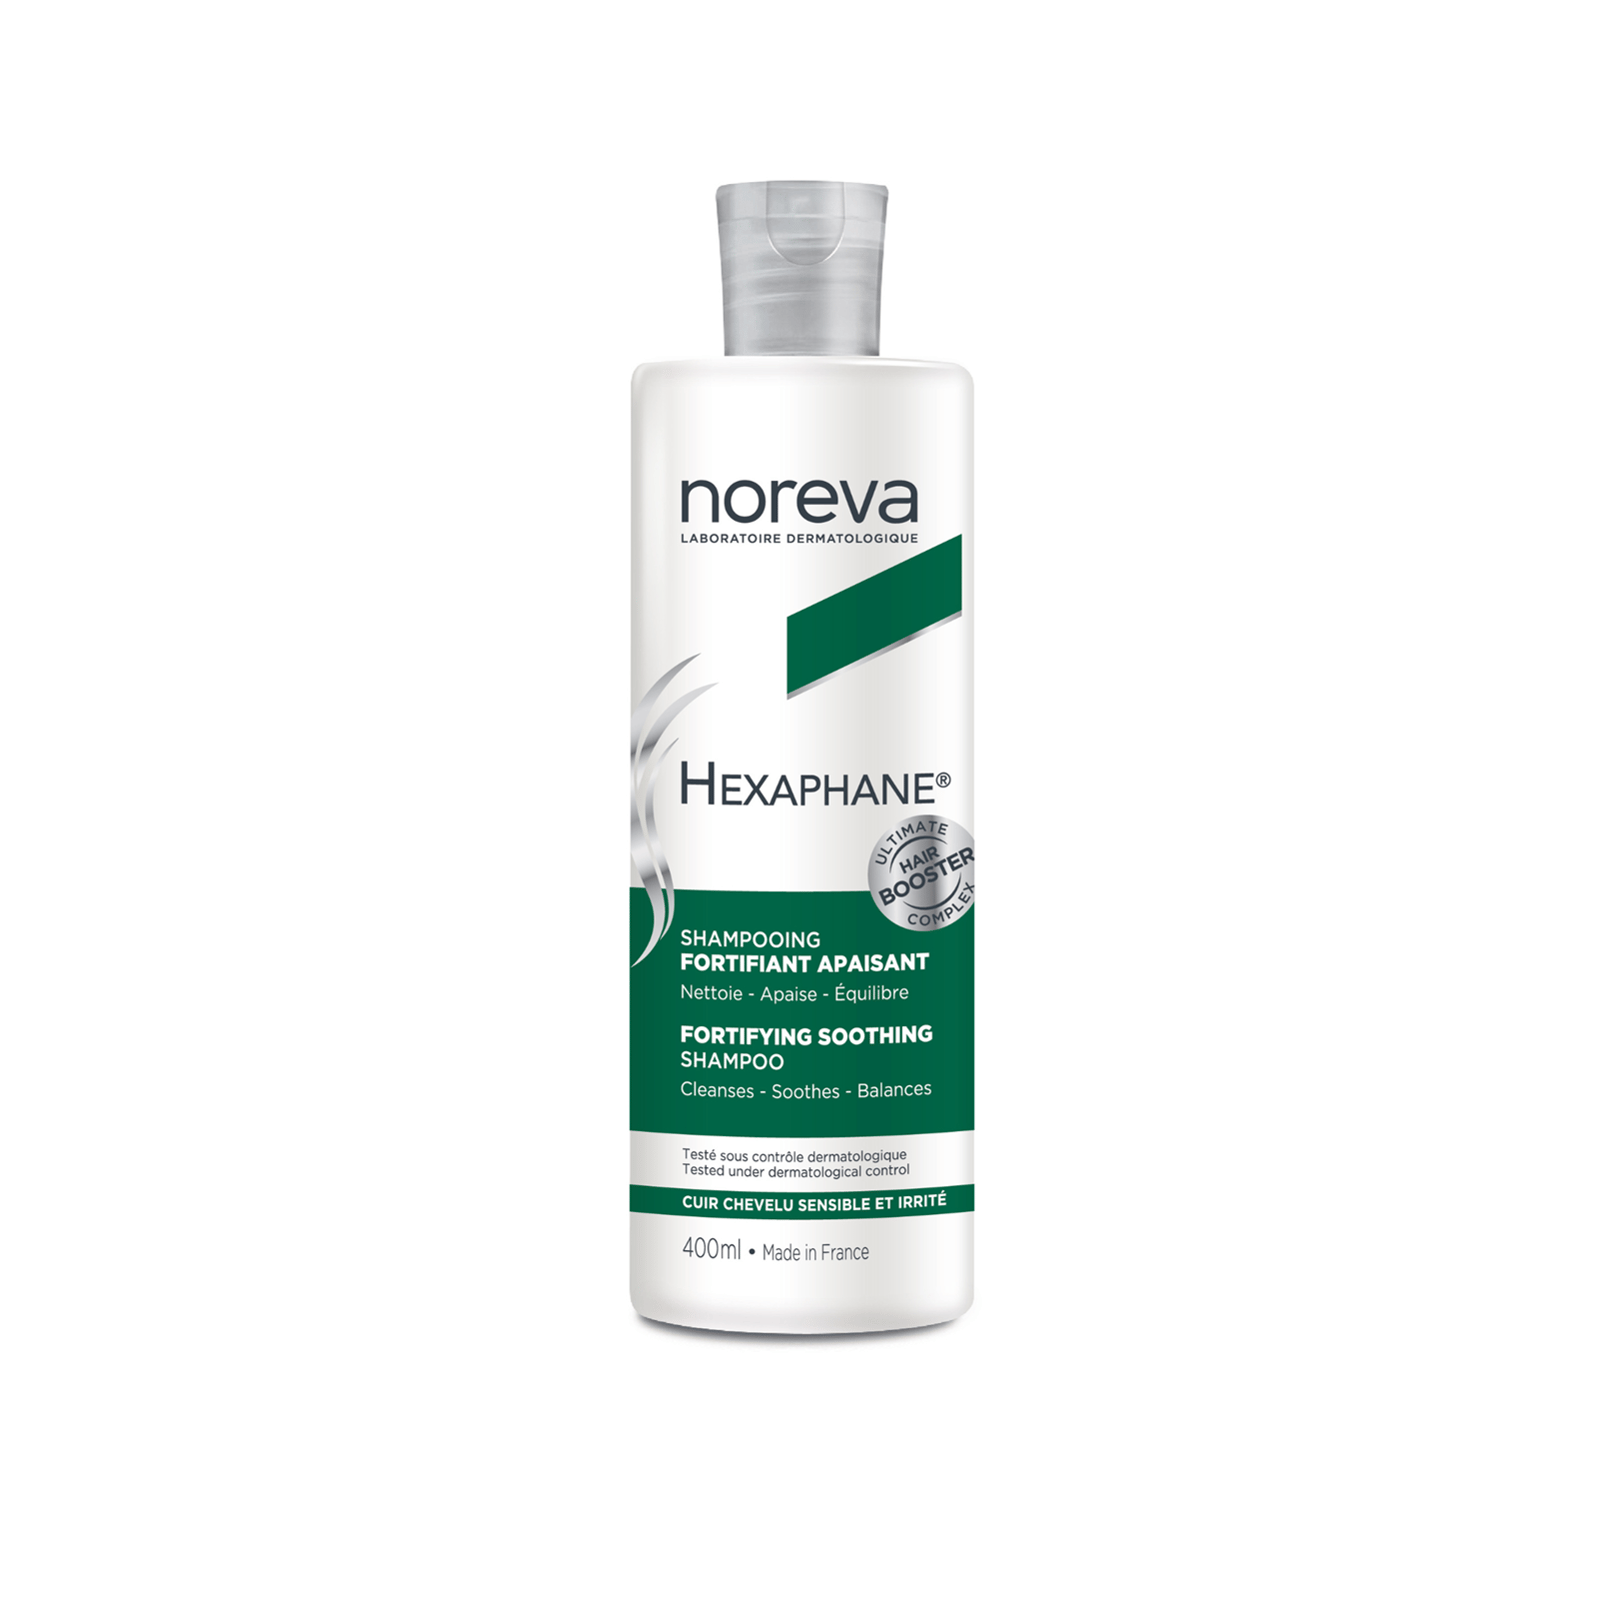 Noreva Hexaphane Fortifying Soothing Shampoo 400ml